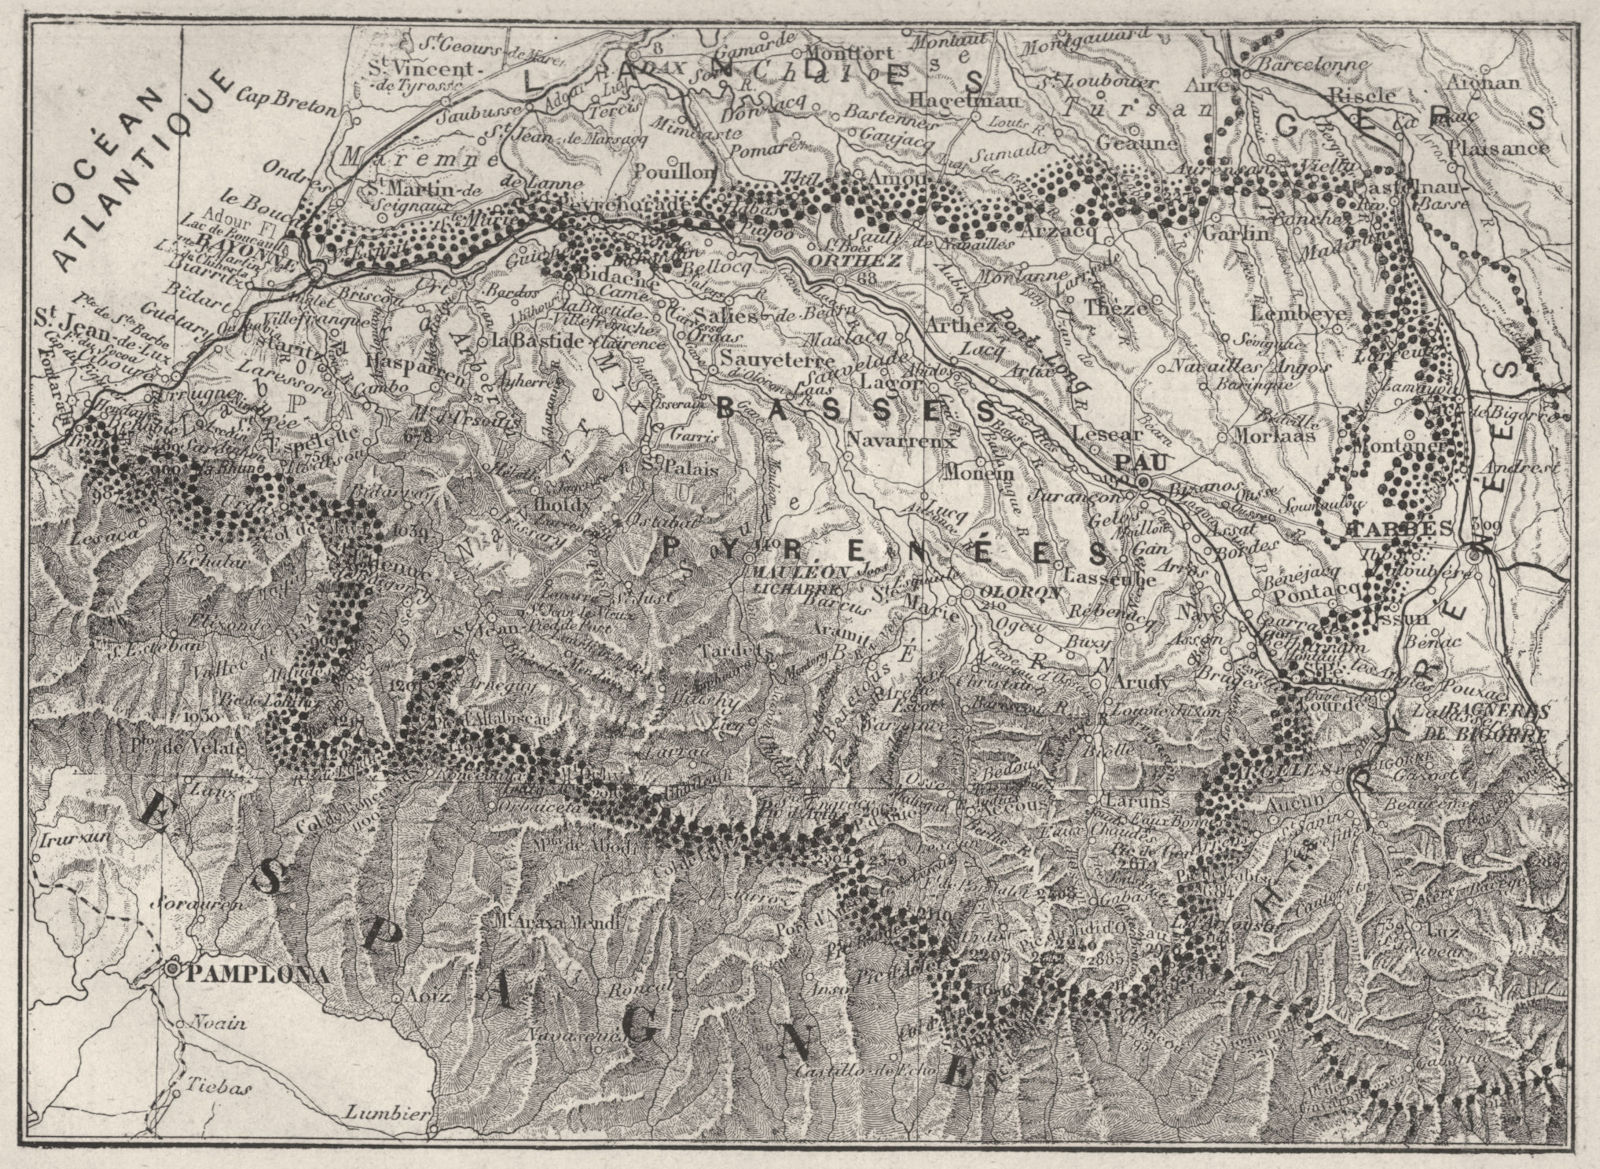 PYRÉNÉES-ATLANTIQUESCACHED-SIMILAR. Pyrenees(Basses-) 1878 old map